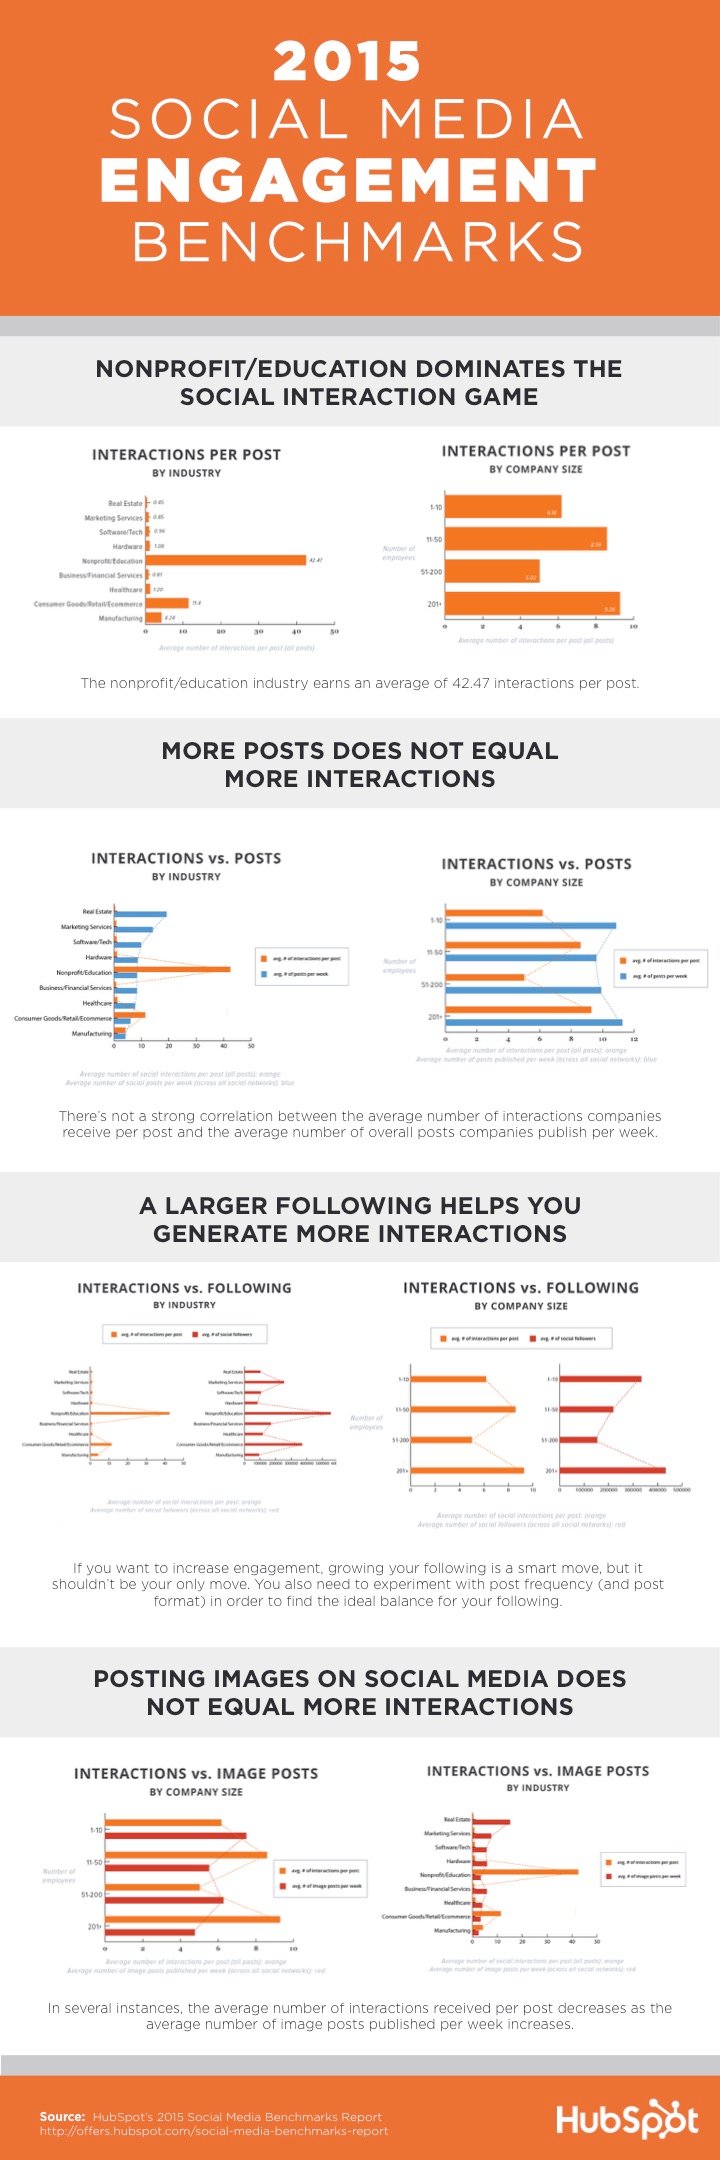 2015 Social Media Benchmarks Infographic